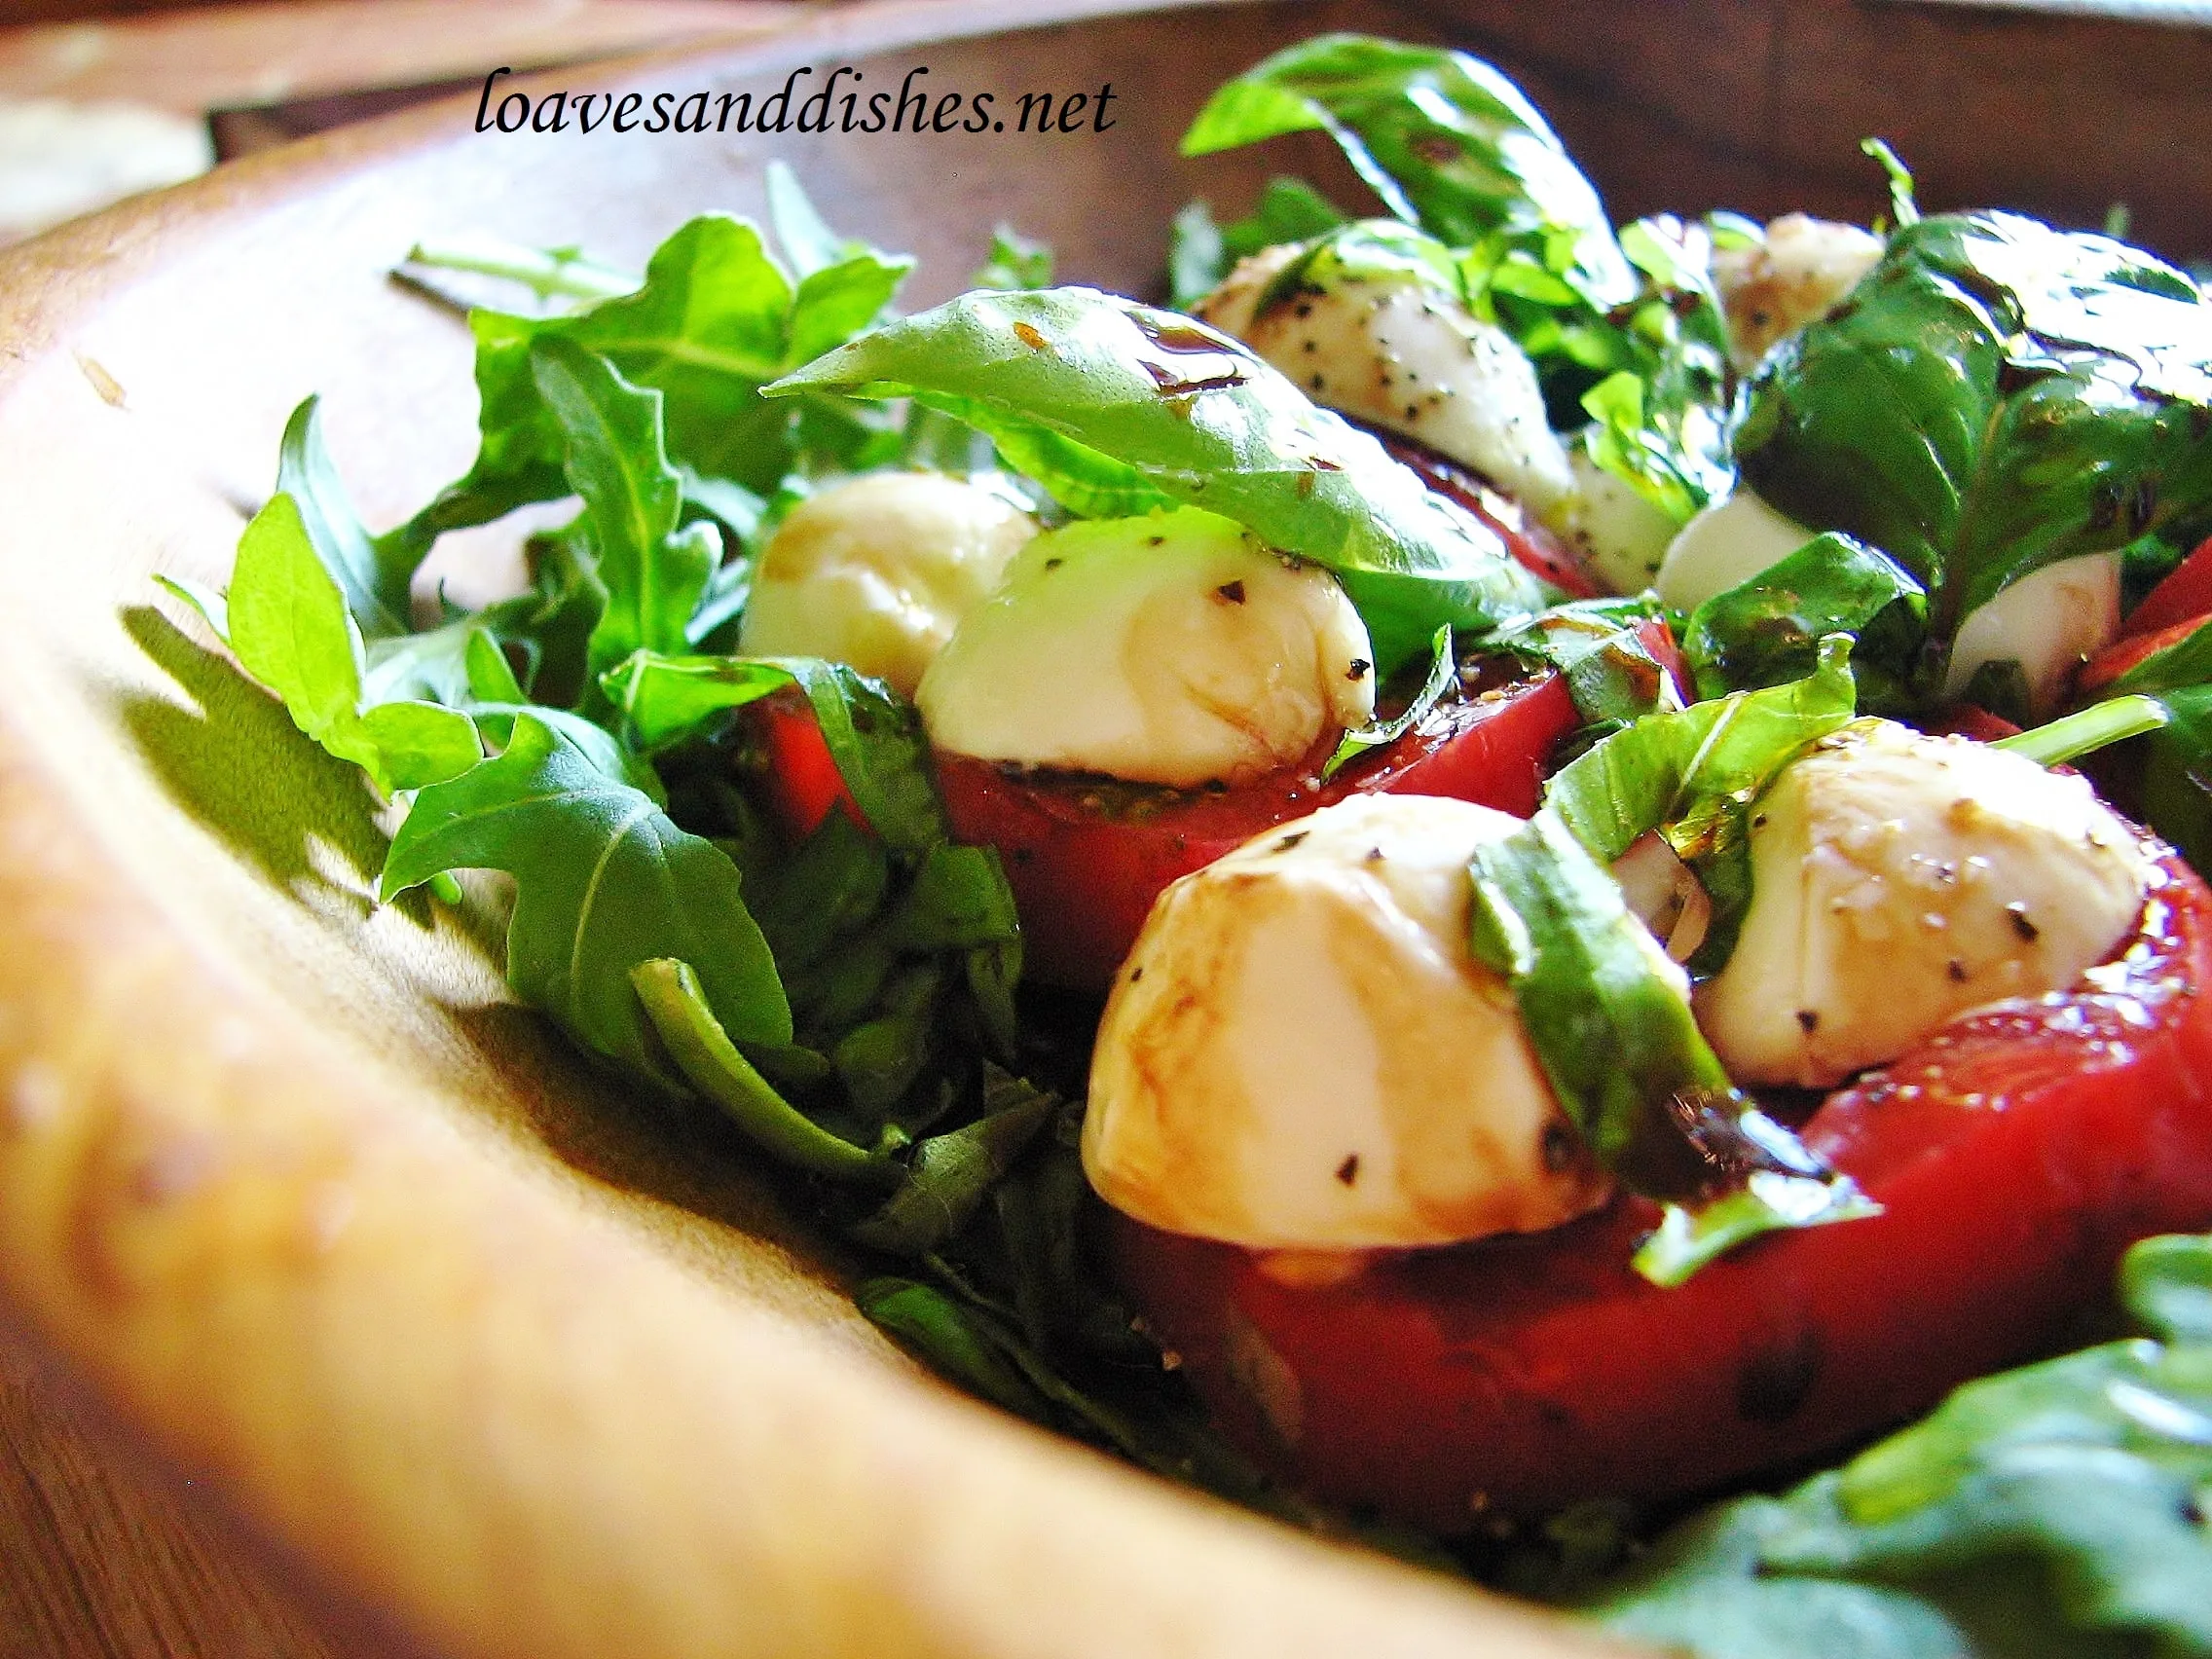 arugula salad with mozzarella, tomato and balsamic dressing